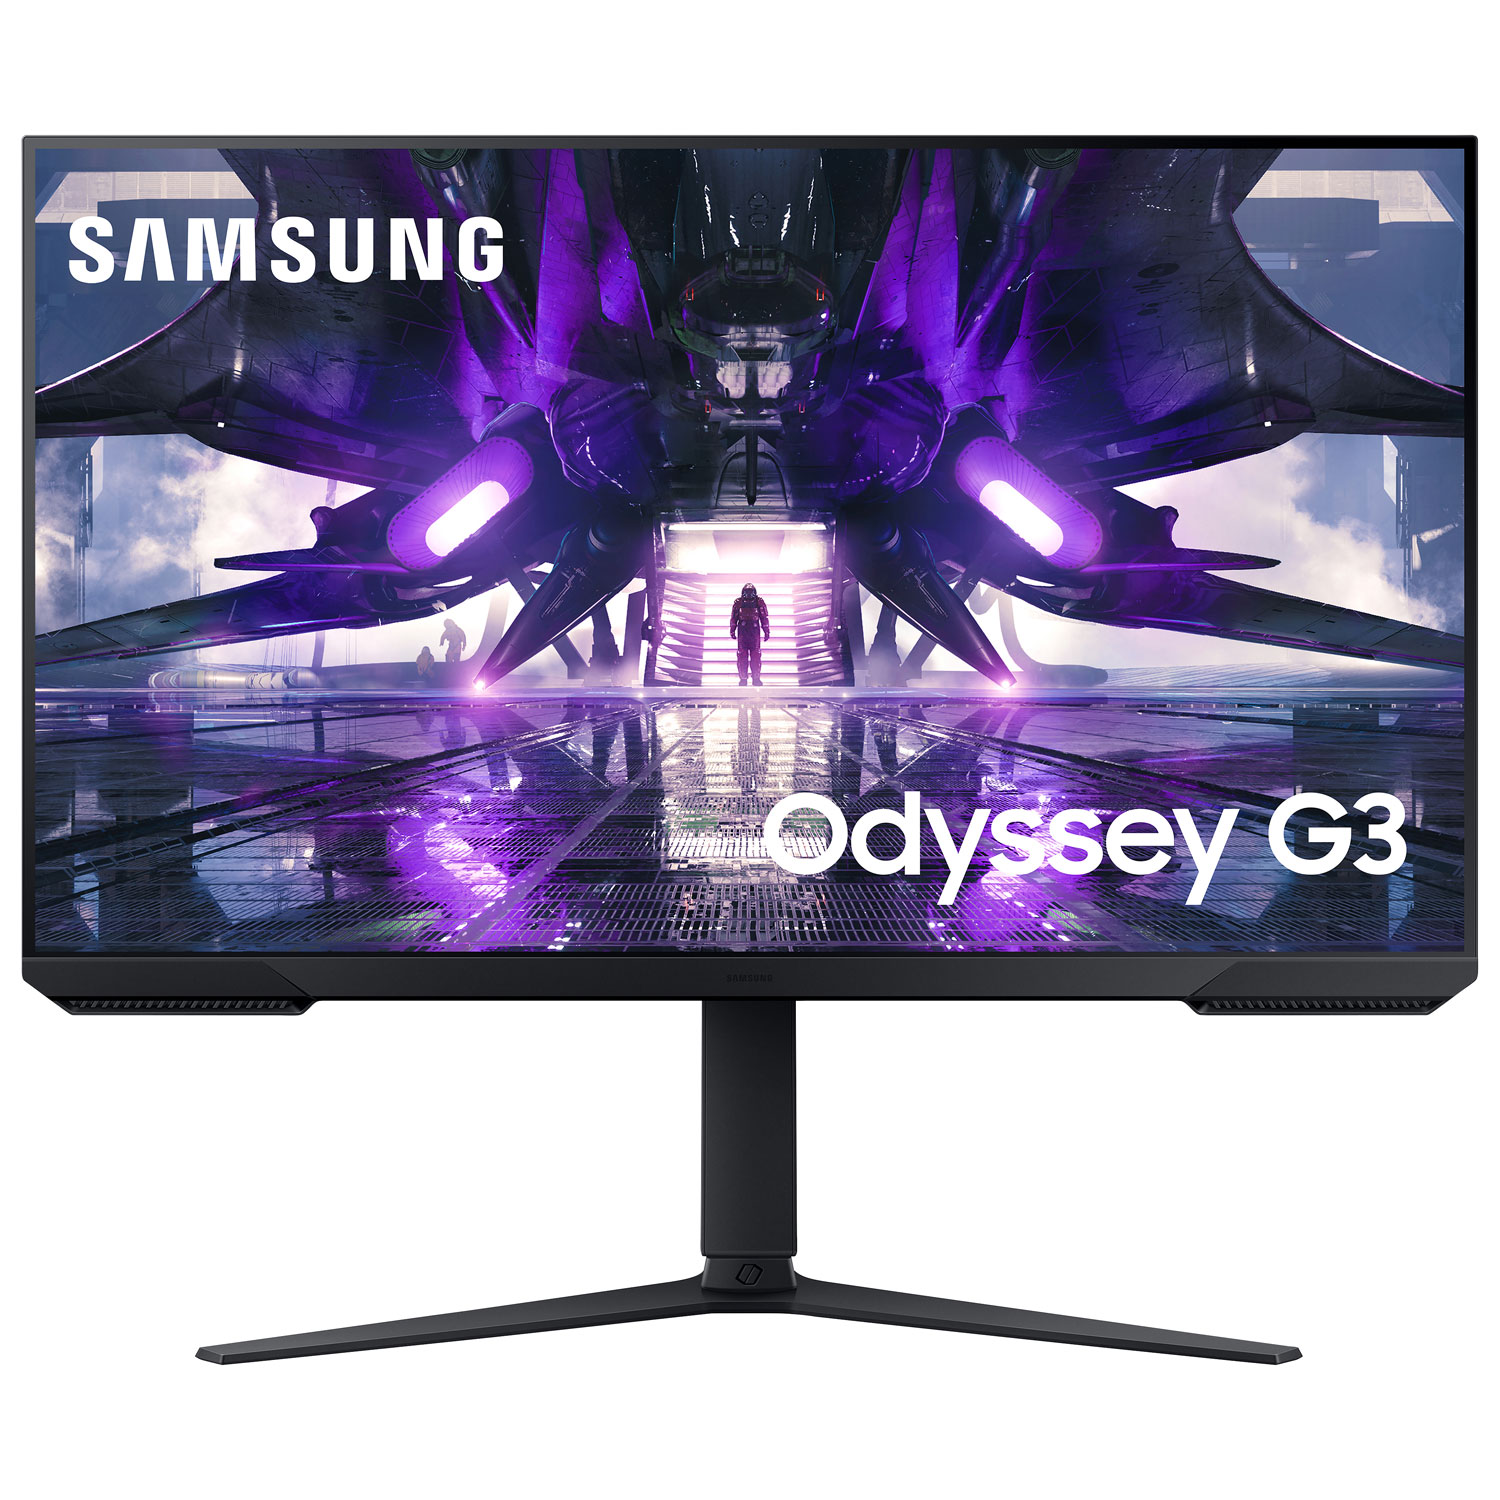 Samsung Odyssey G3 32" FHD 165Hz 1ms GTG VA LCD FreeSync Gaming Monitor (LS32AG320NNXZA) - Black